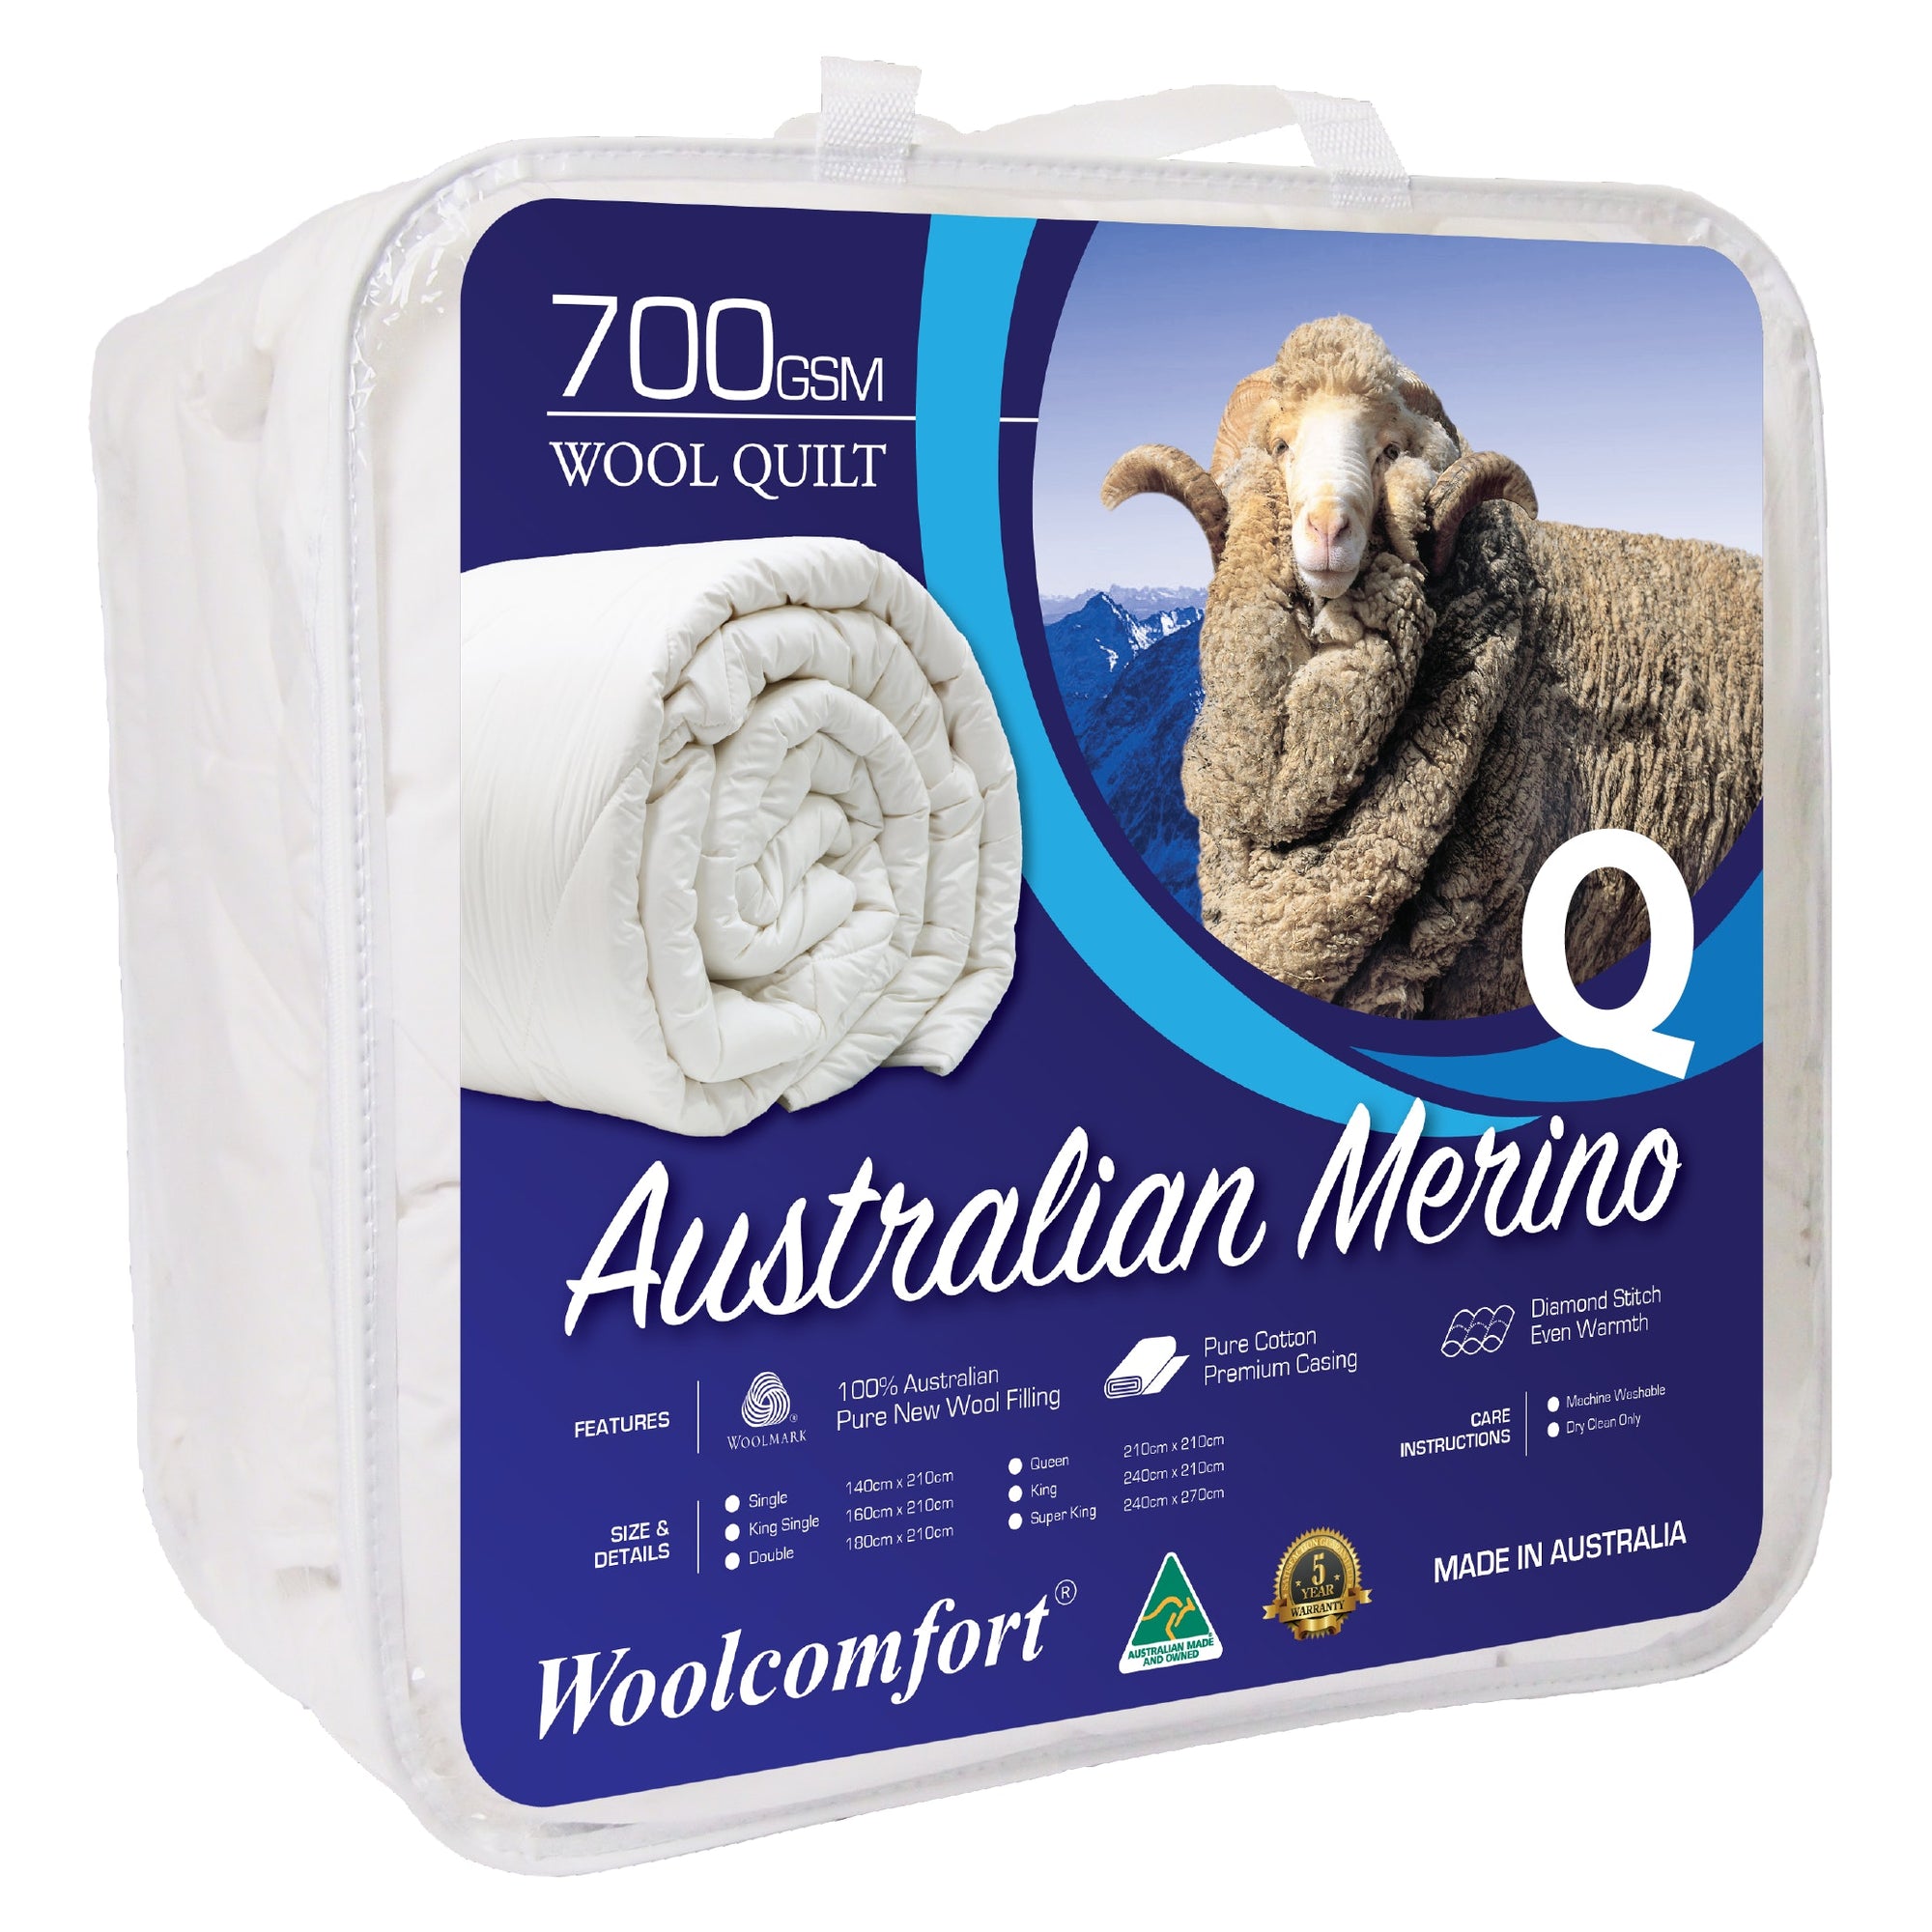 Woolcomfort Aus Made Merino Wool Quilt 700GSM - Queen Size (210x210cm)